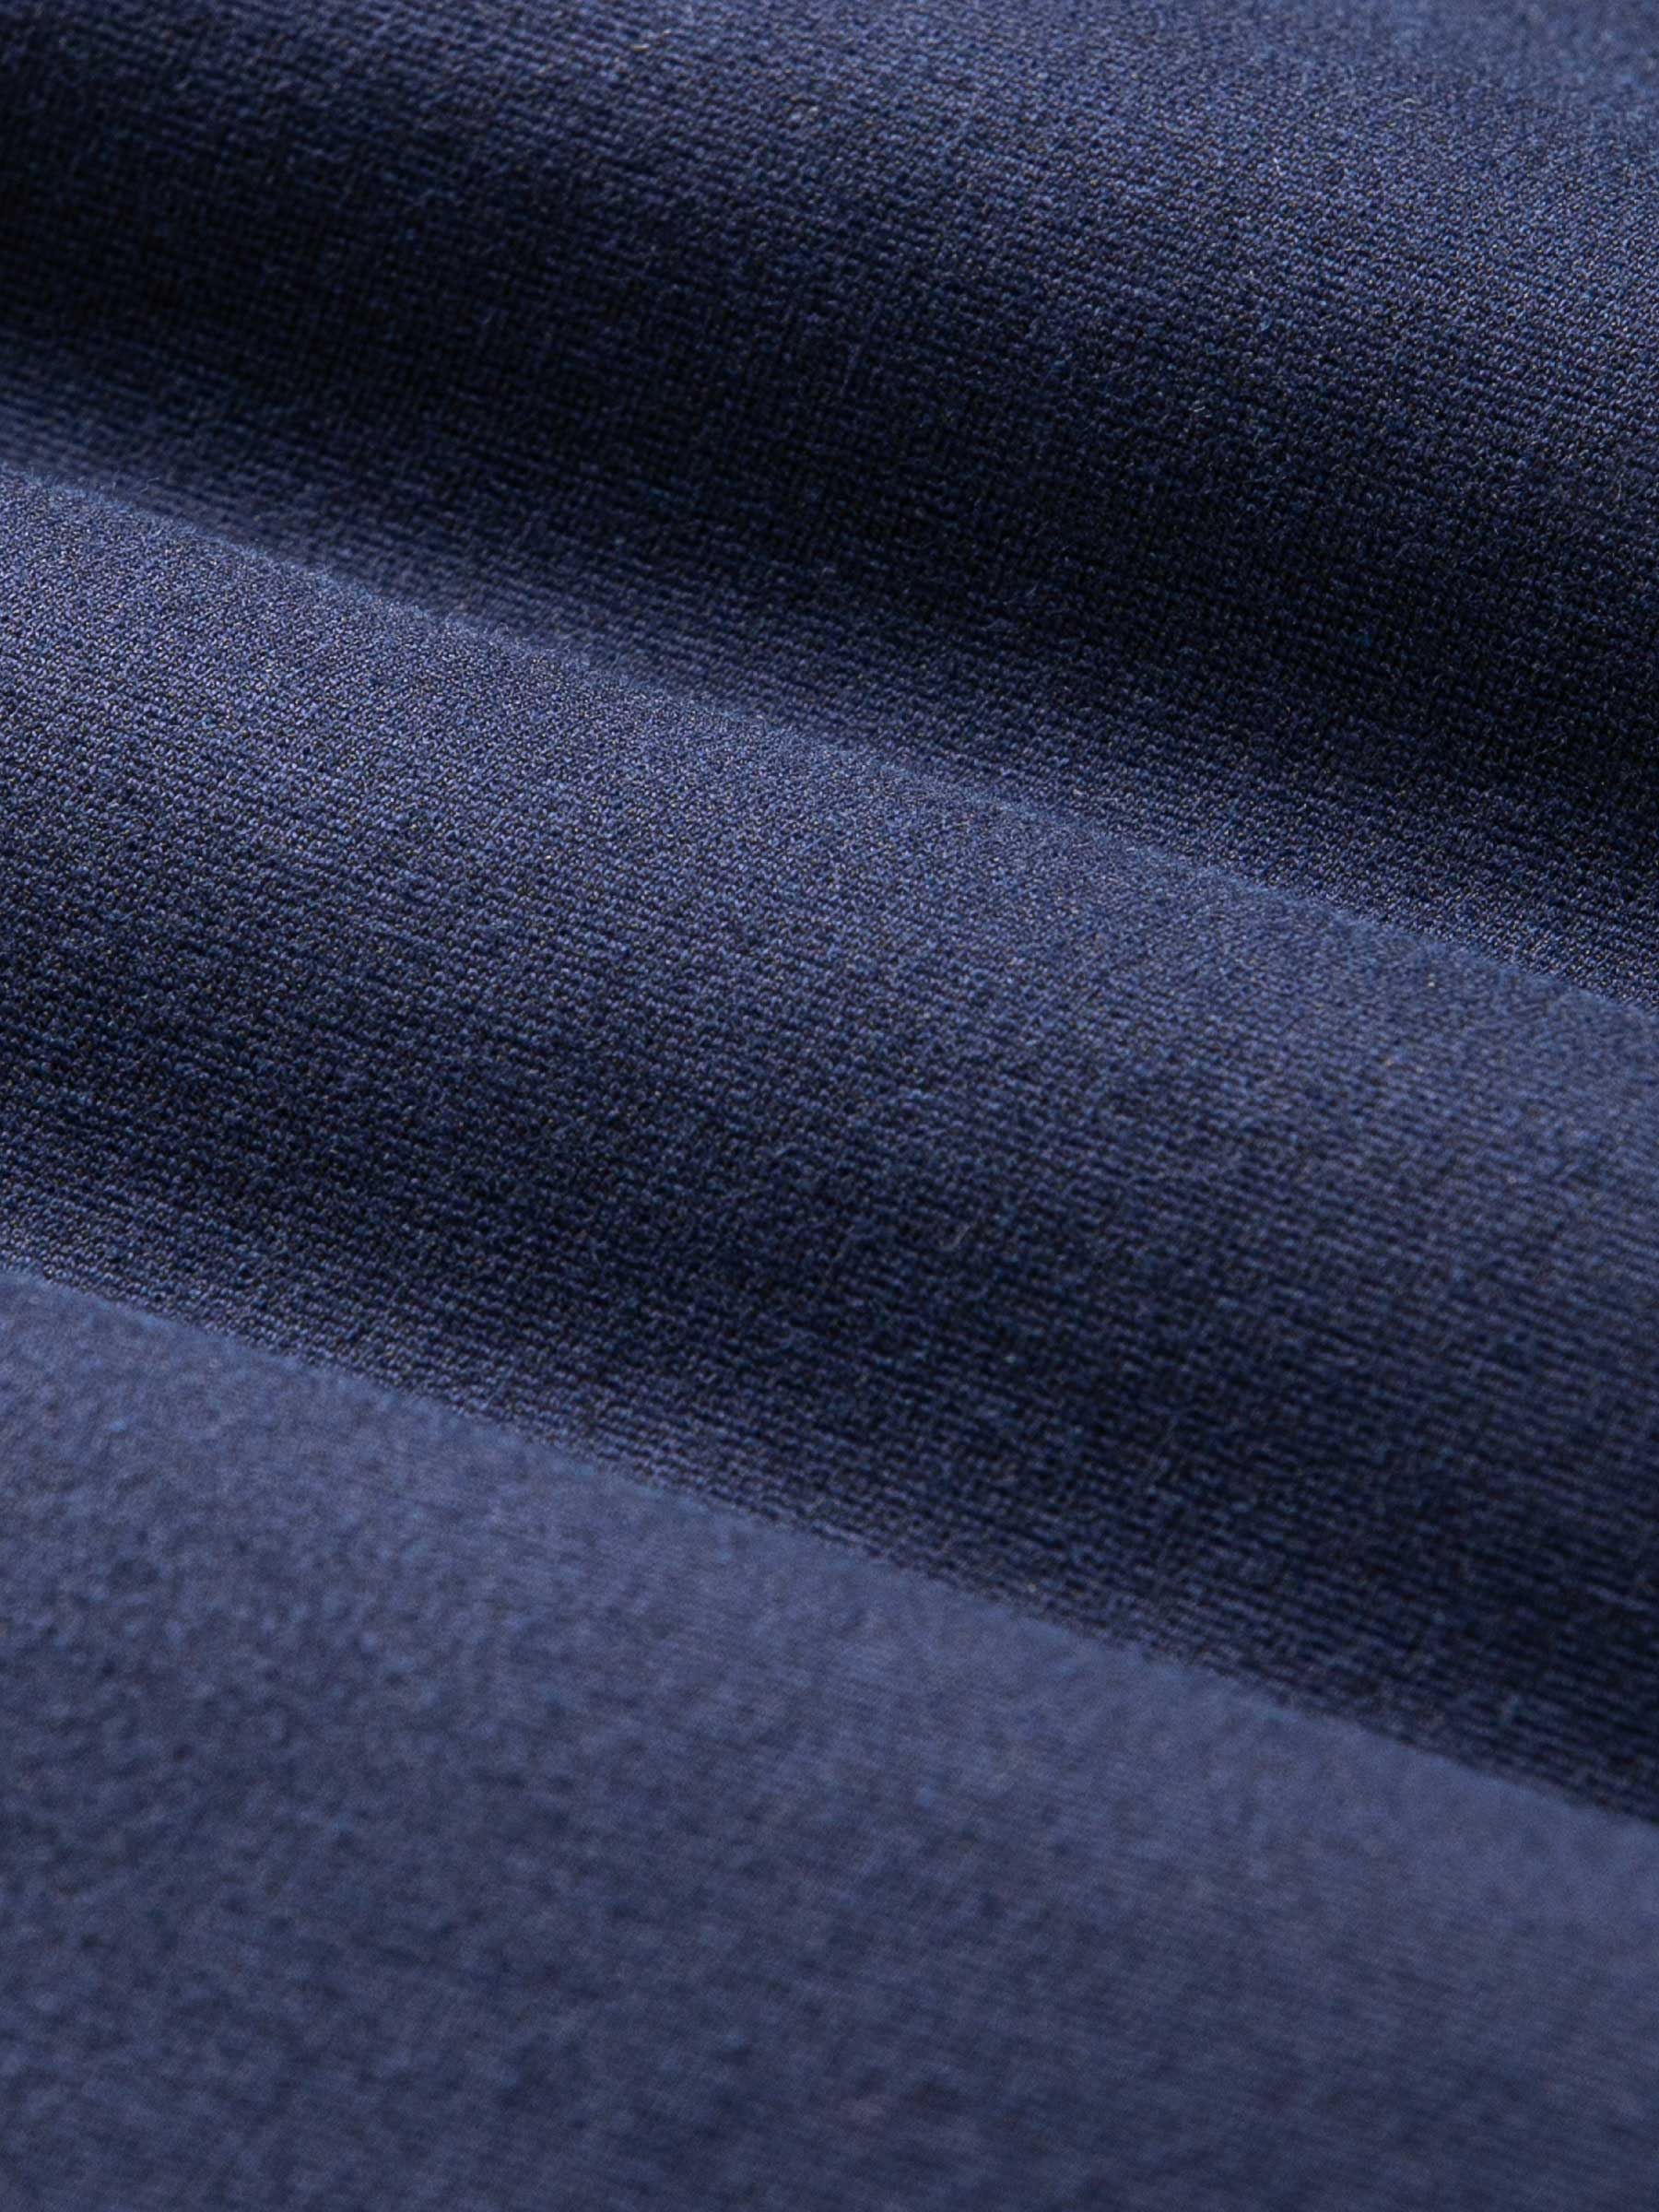 Horizon Turtleneck Navy Sweater -XL